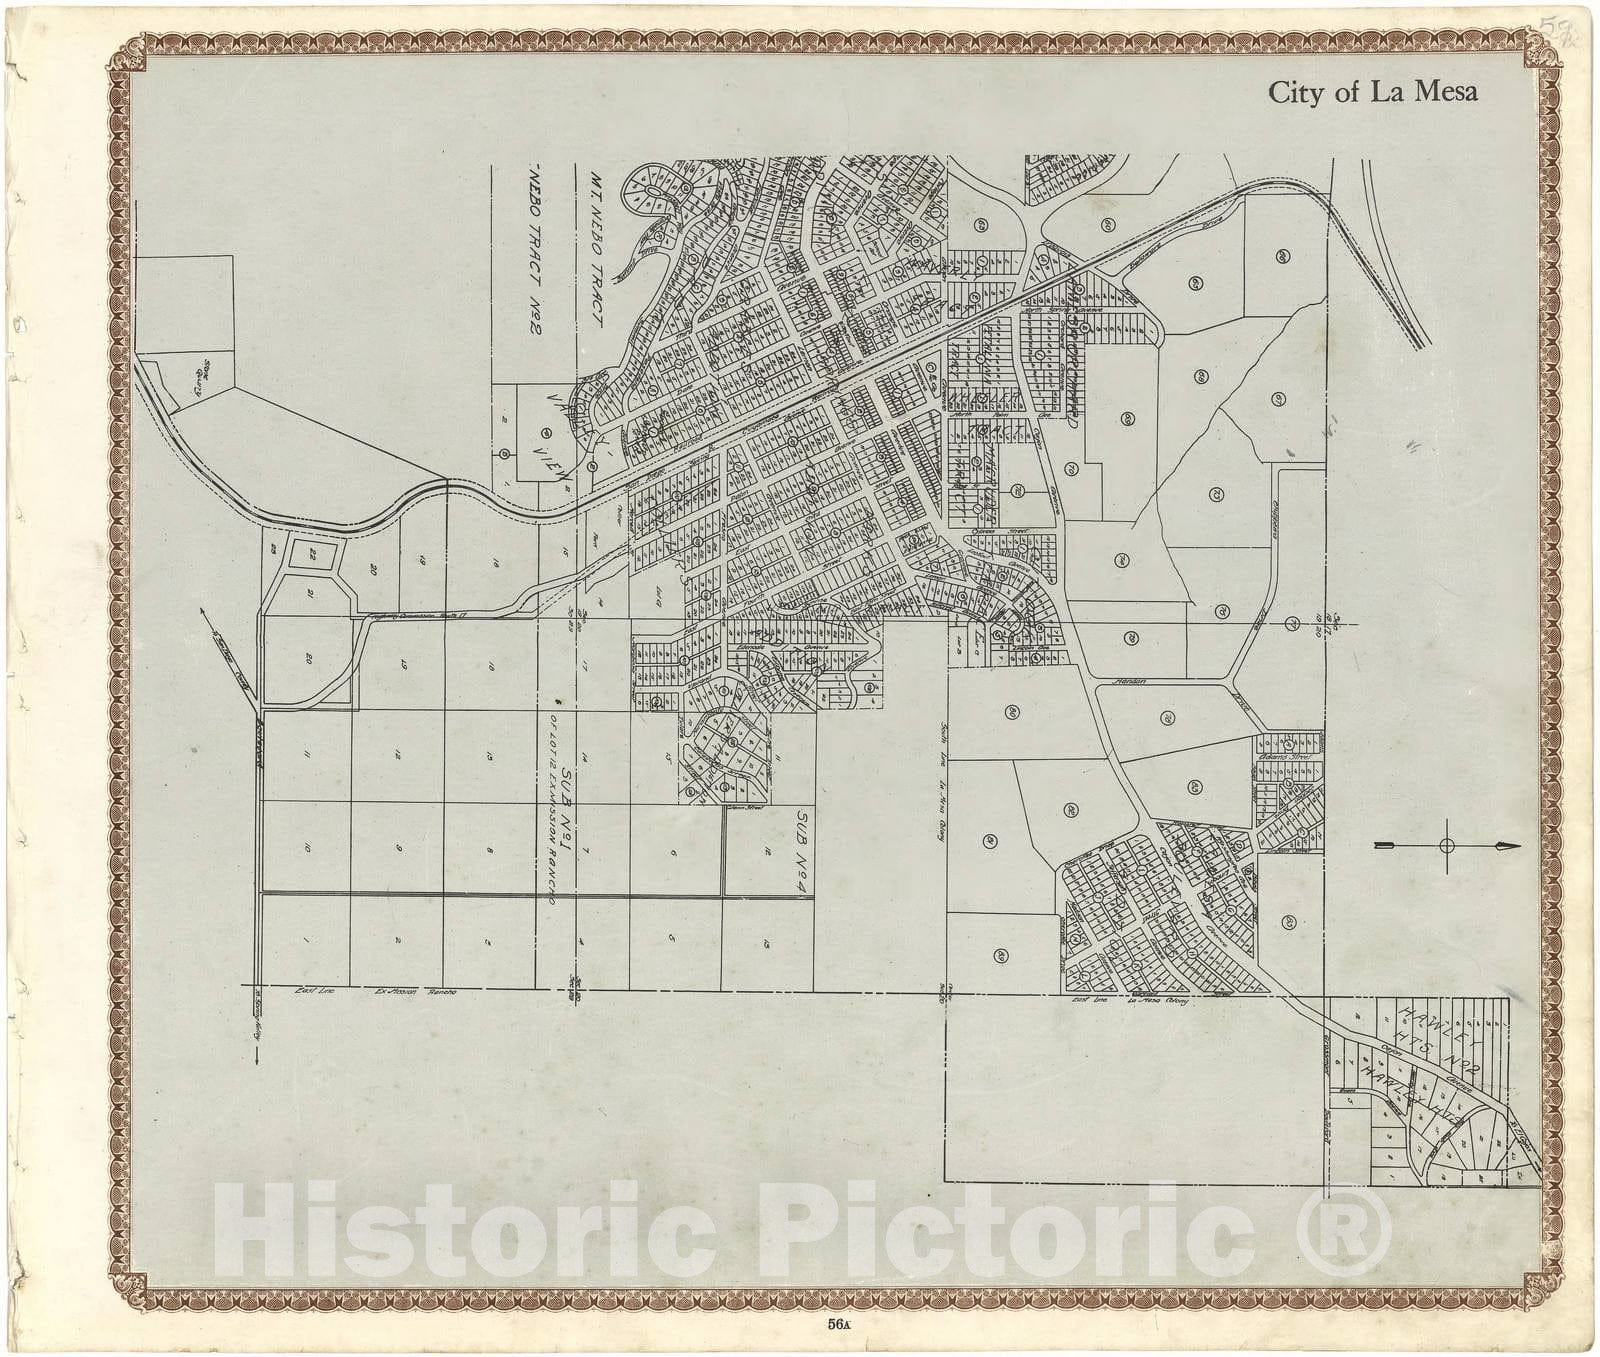 Historic 1912 Map - Plat Book of San Diego County, California - City of La Mesa 1